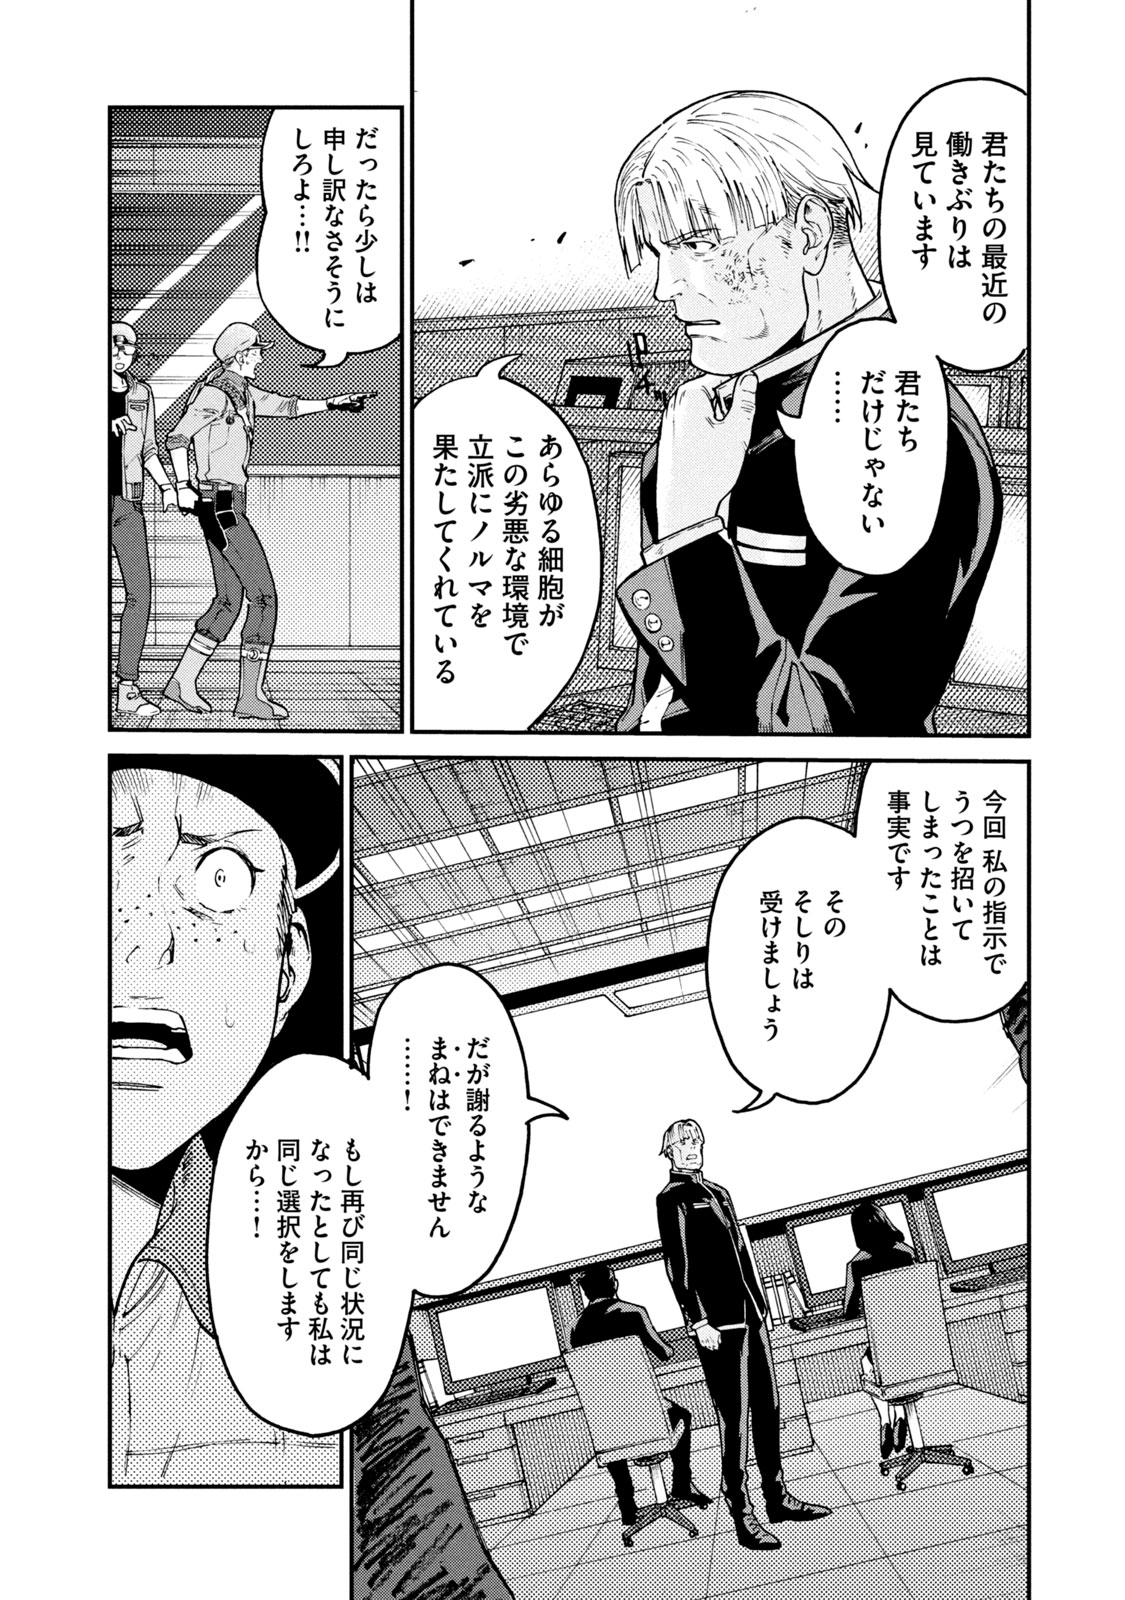 Hataraku Saibou BLACK - Chapter 34 - Page 22